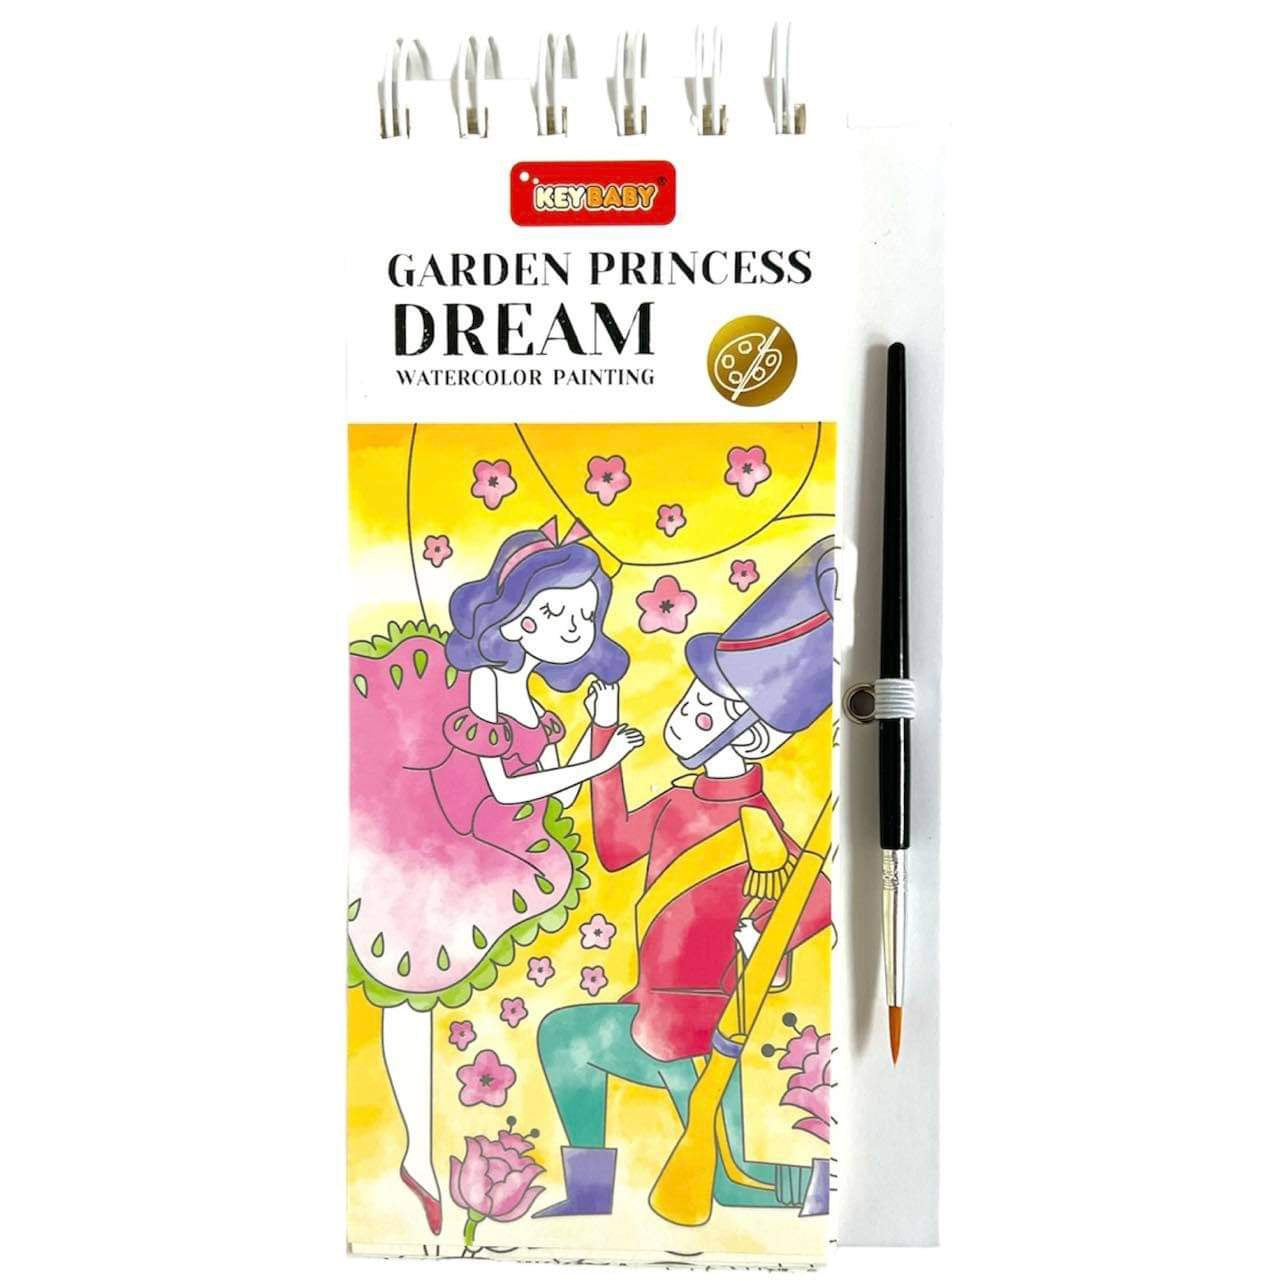 Dream Watercolor Painting Garden Princess || مجموعة رسمات تلوين مائي الأميرة